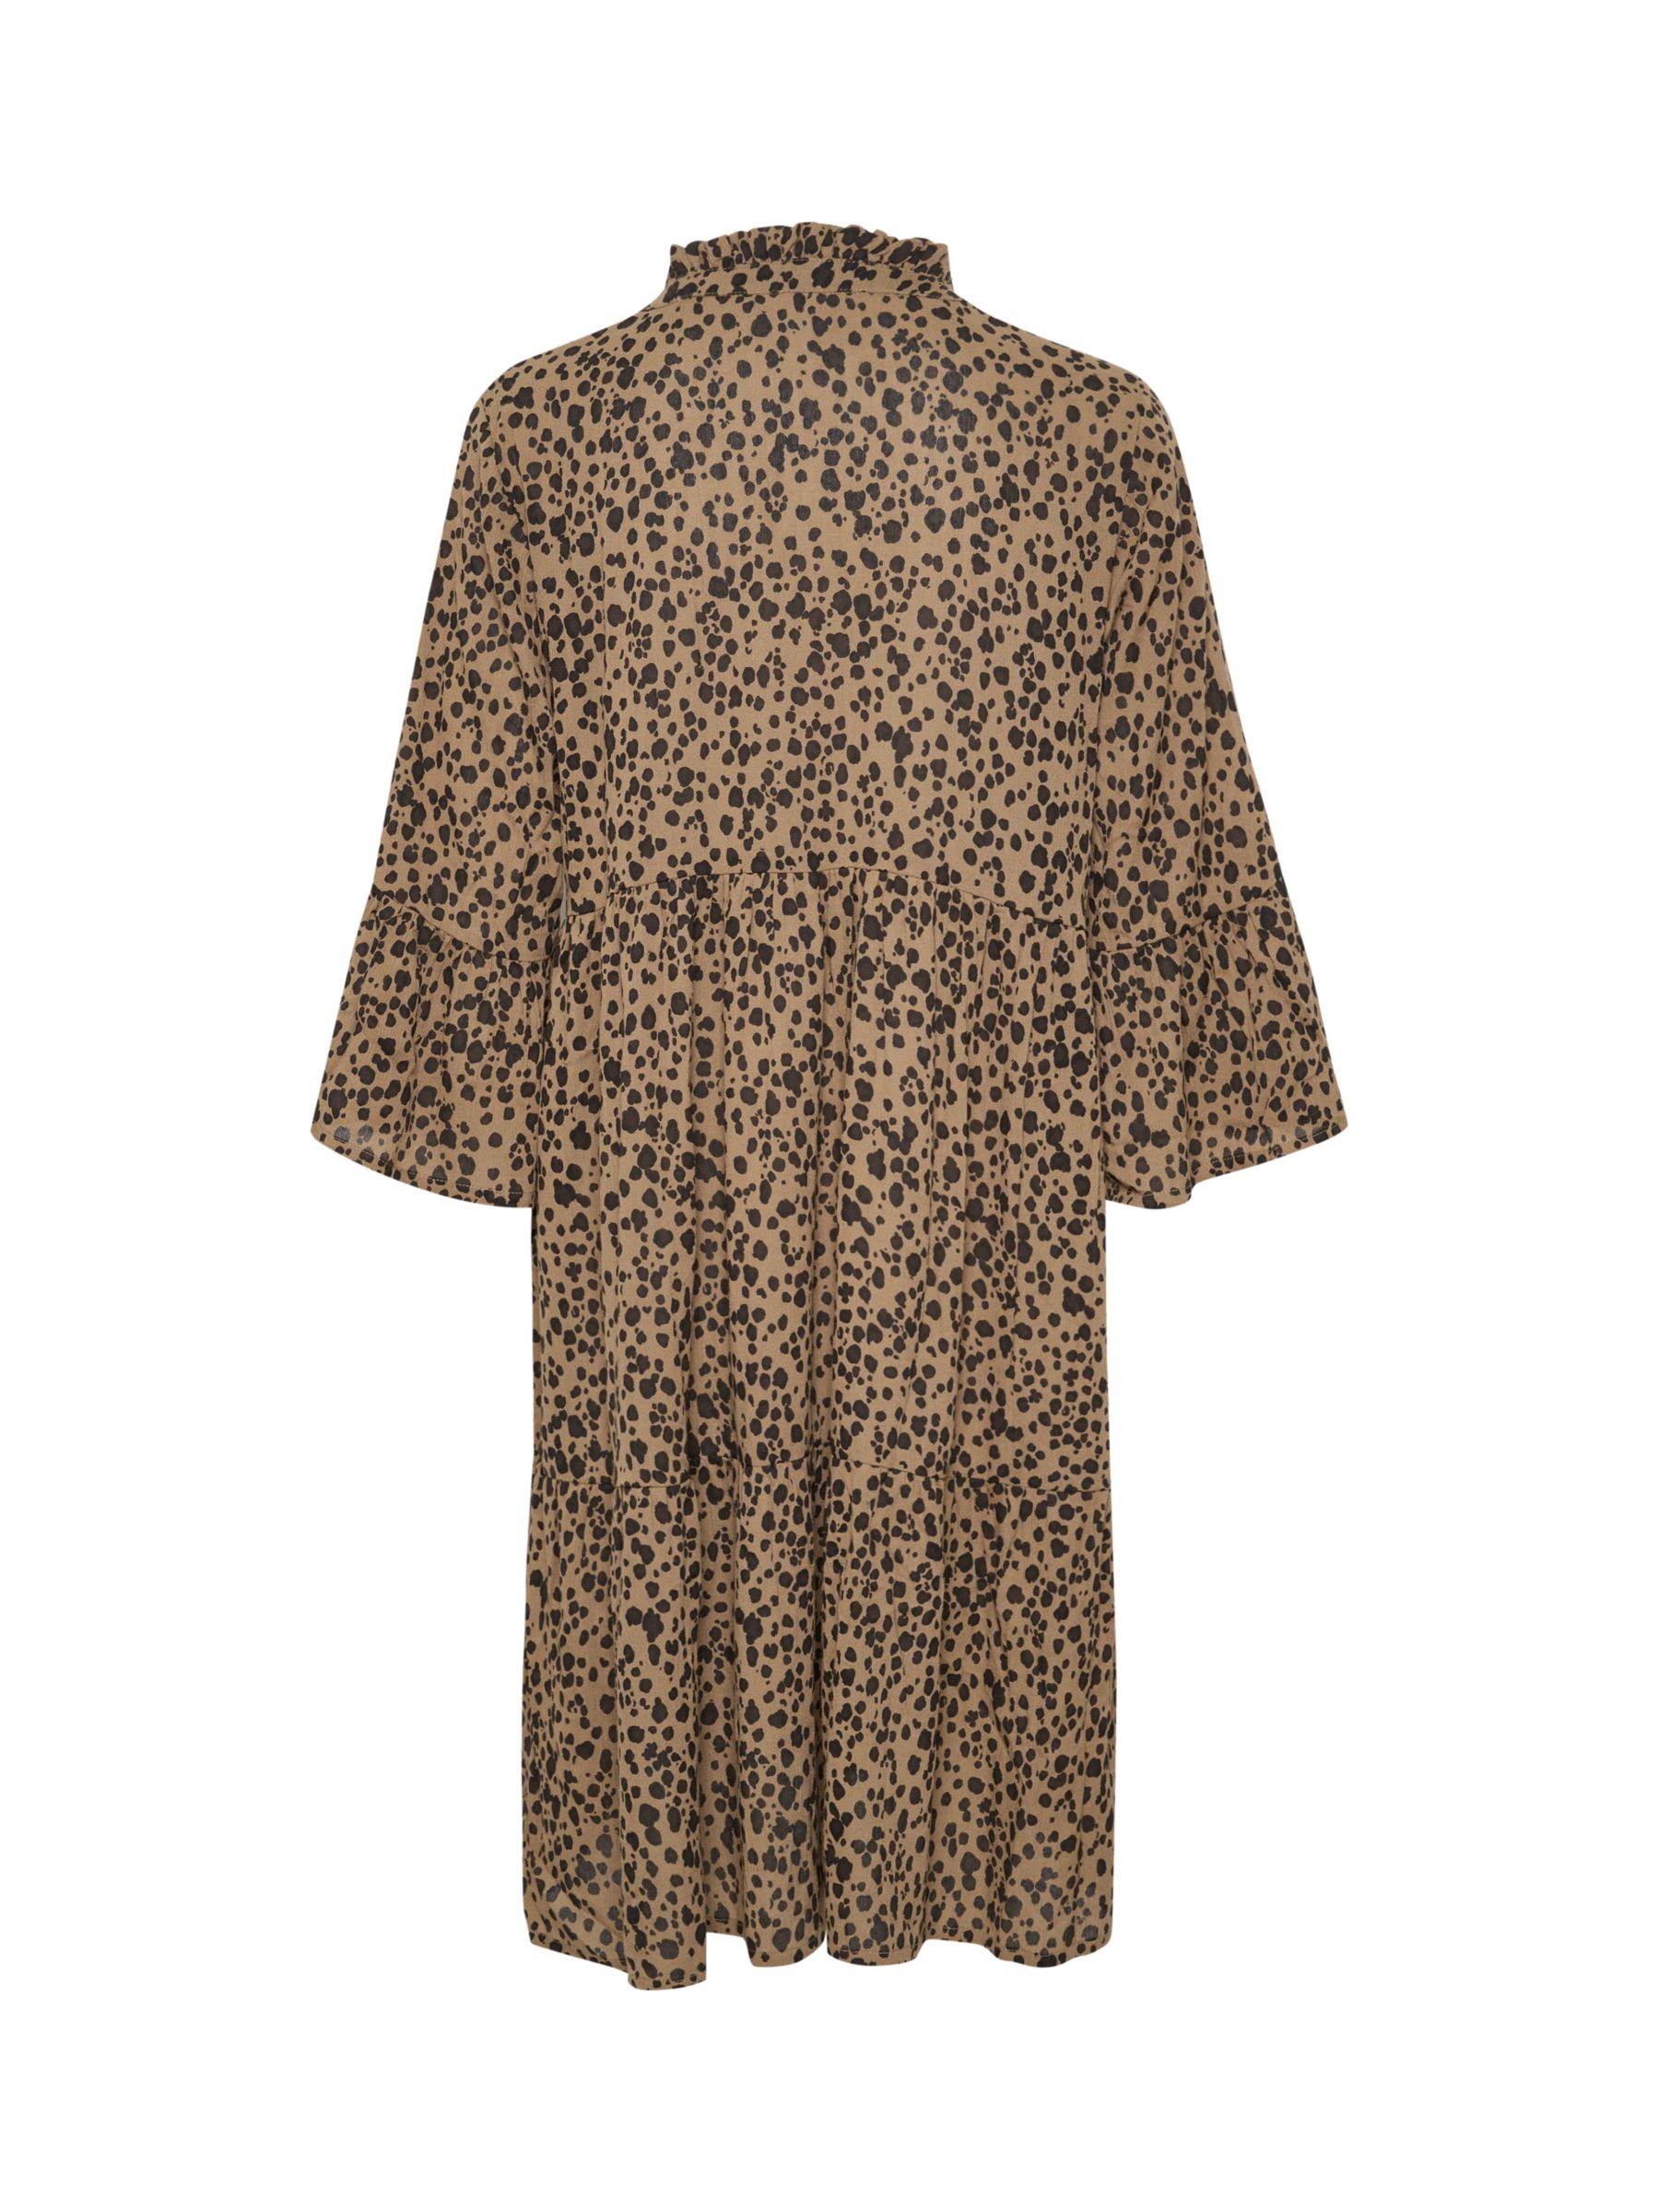 Buy KAFFE Jean Animal Print Tunic Dress, Cocoa Crème/Java Online at johnlewis.com